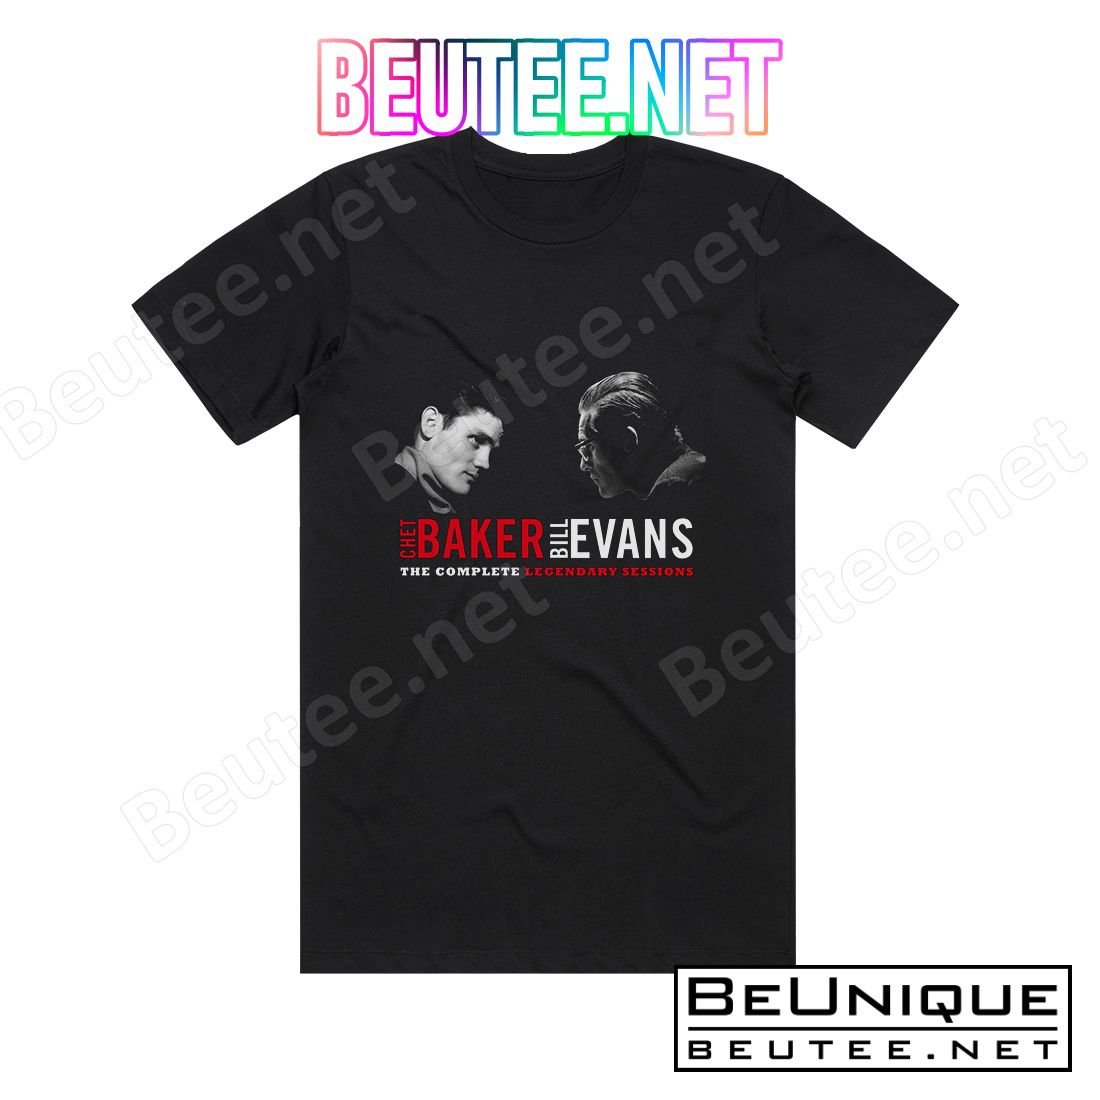 Bill Evans The Complete Legendary Sessions Album Cover T-Shirt